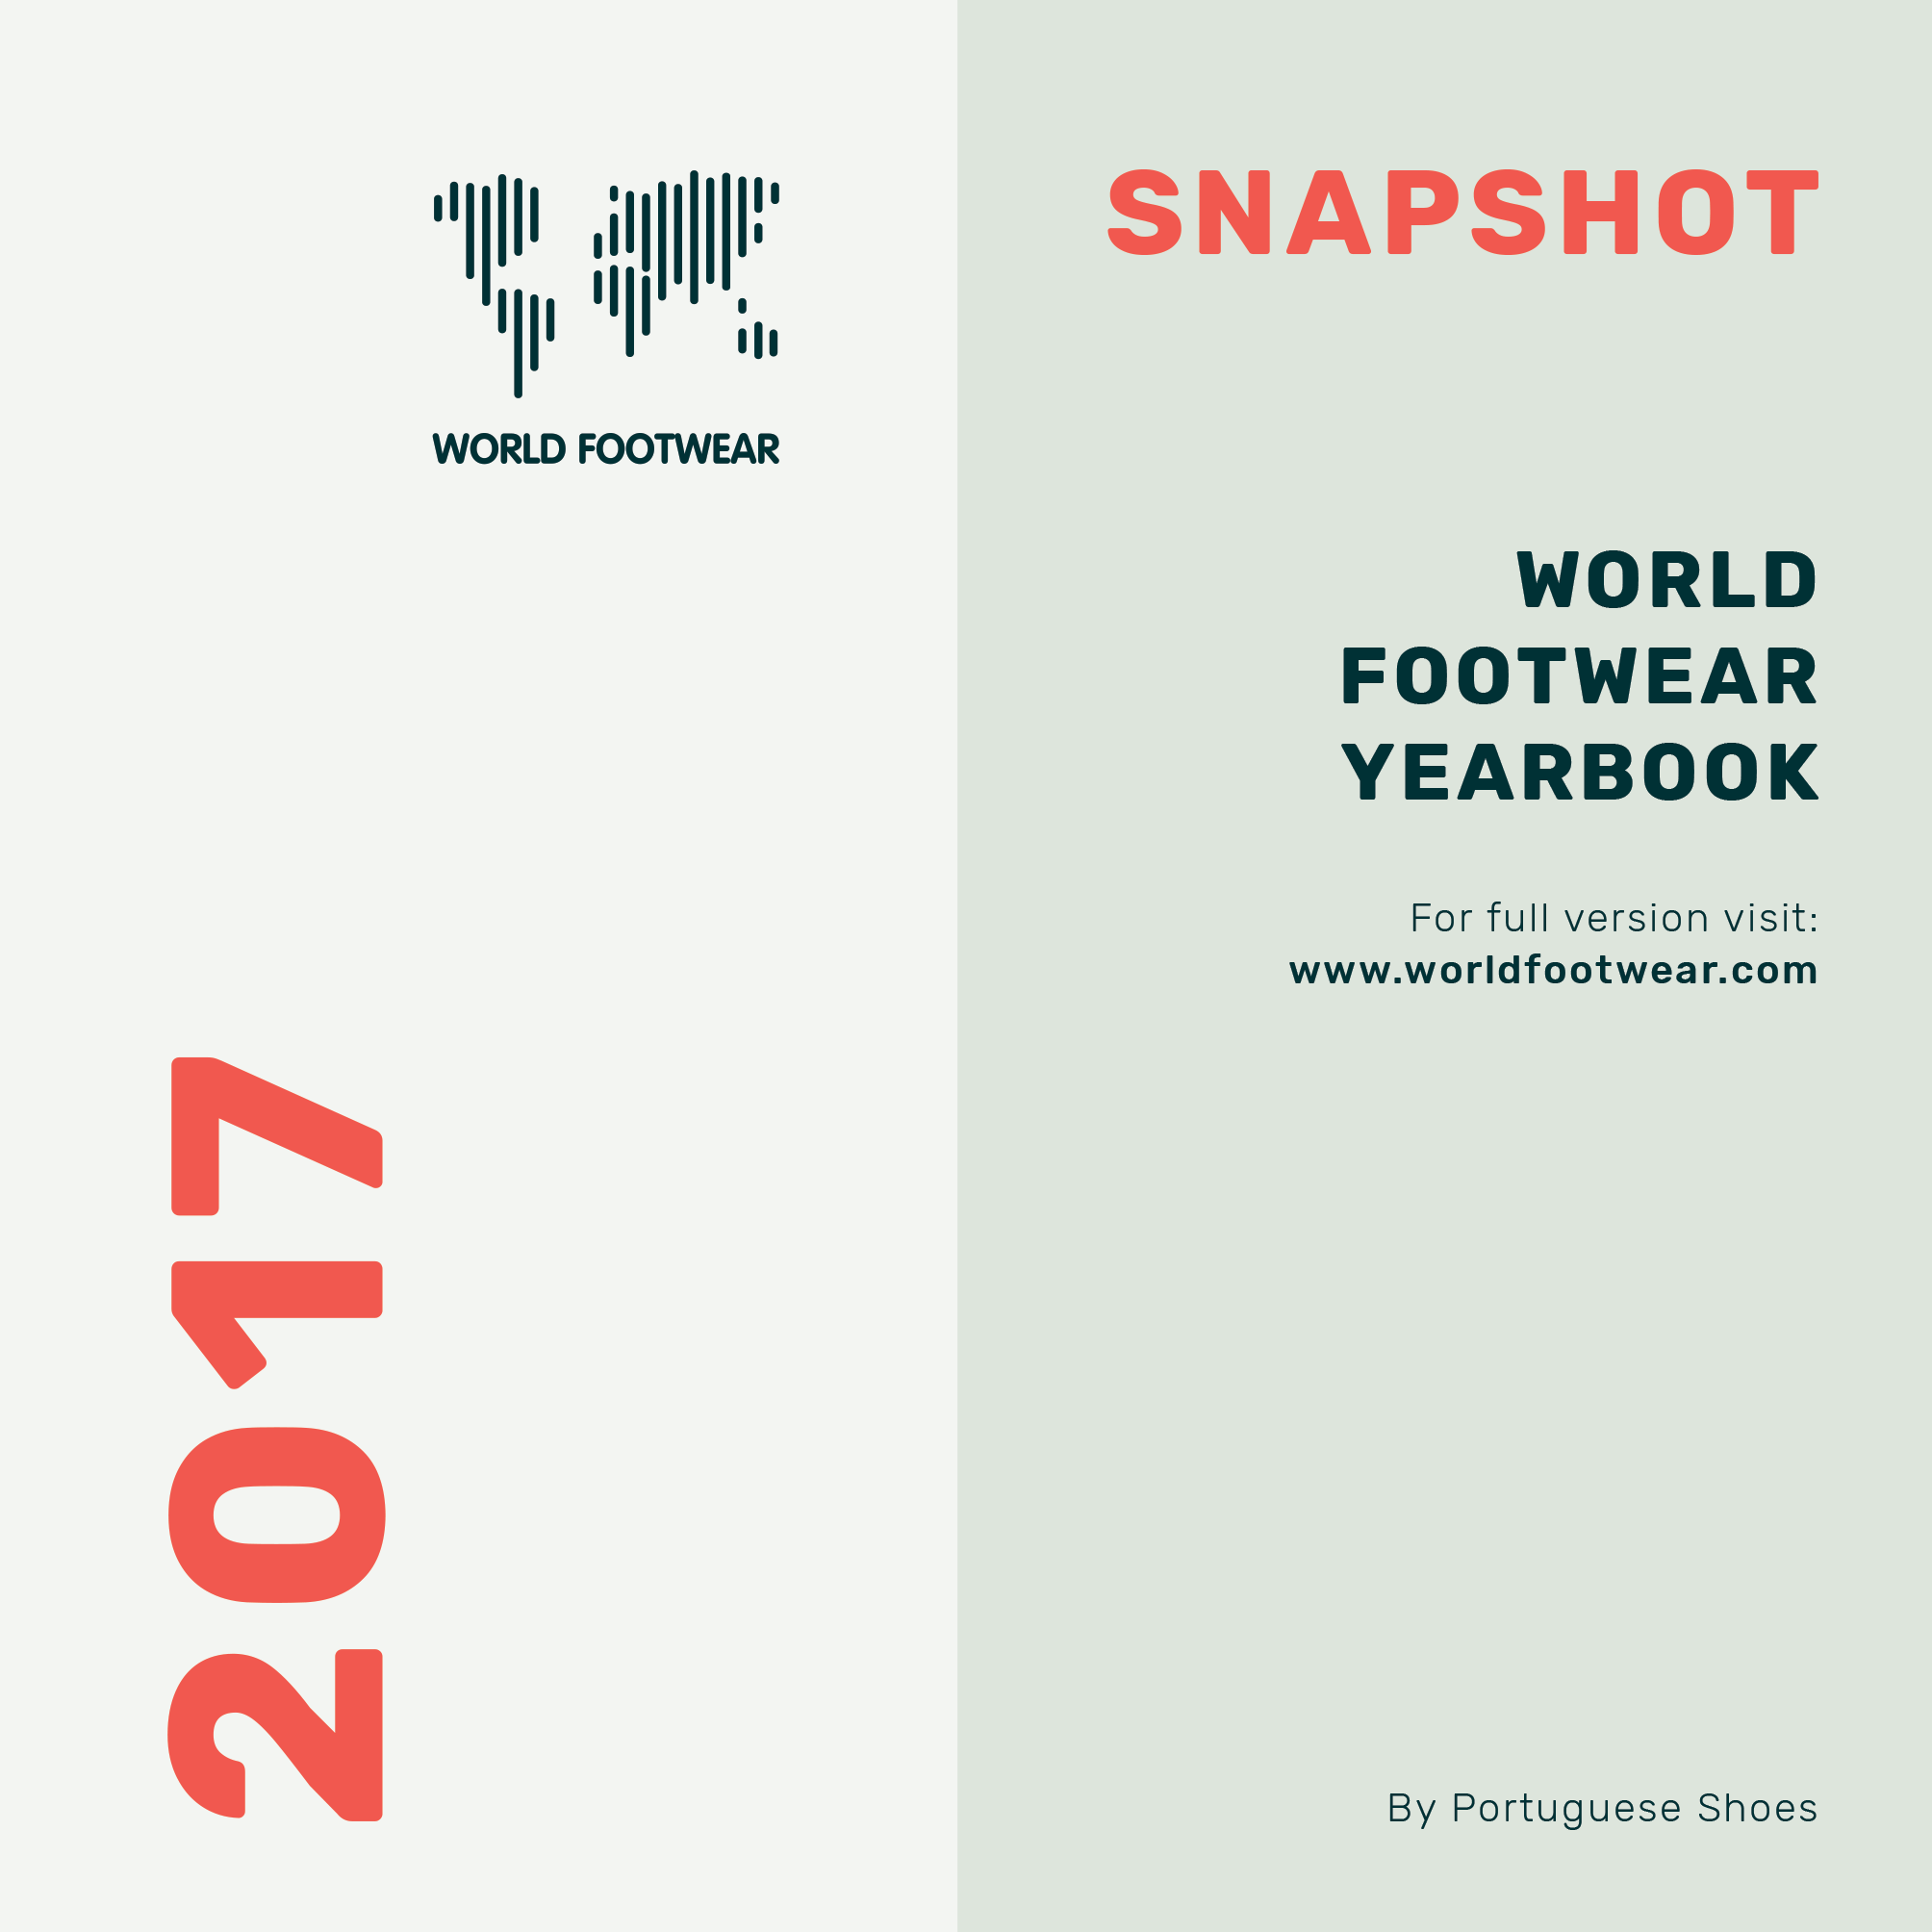 World Footwear Yearbook Snapshot 2017